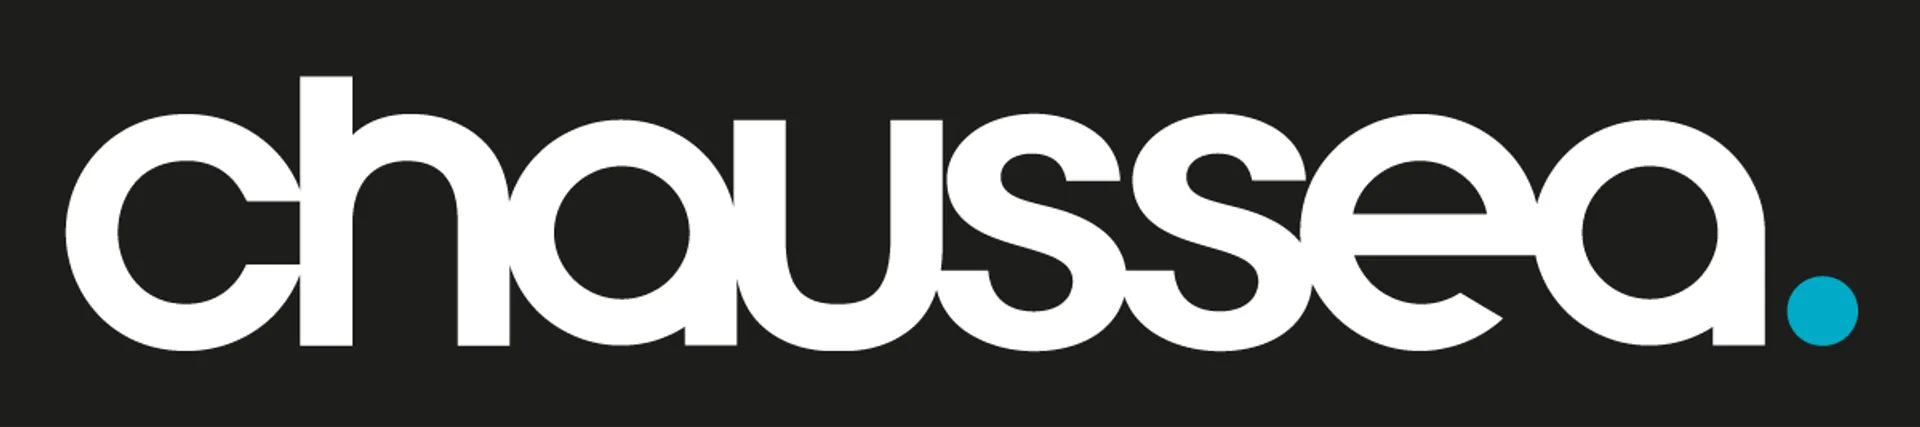 CHAUSSEA logo